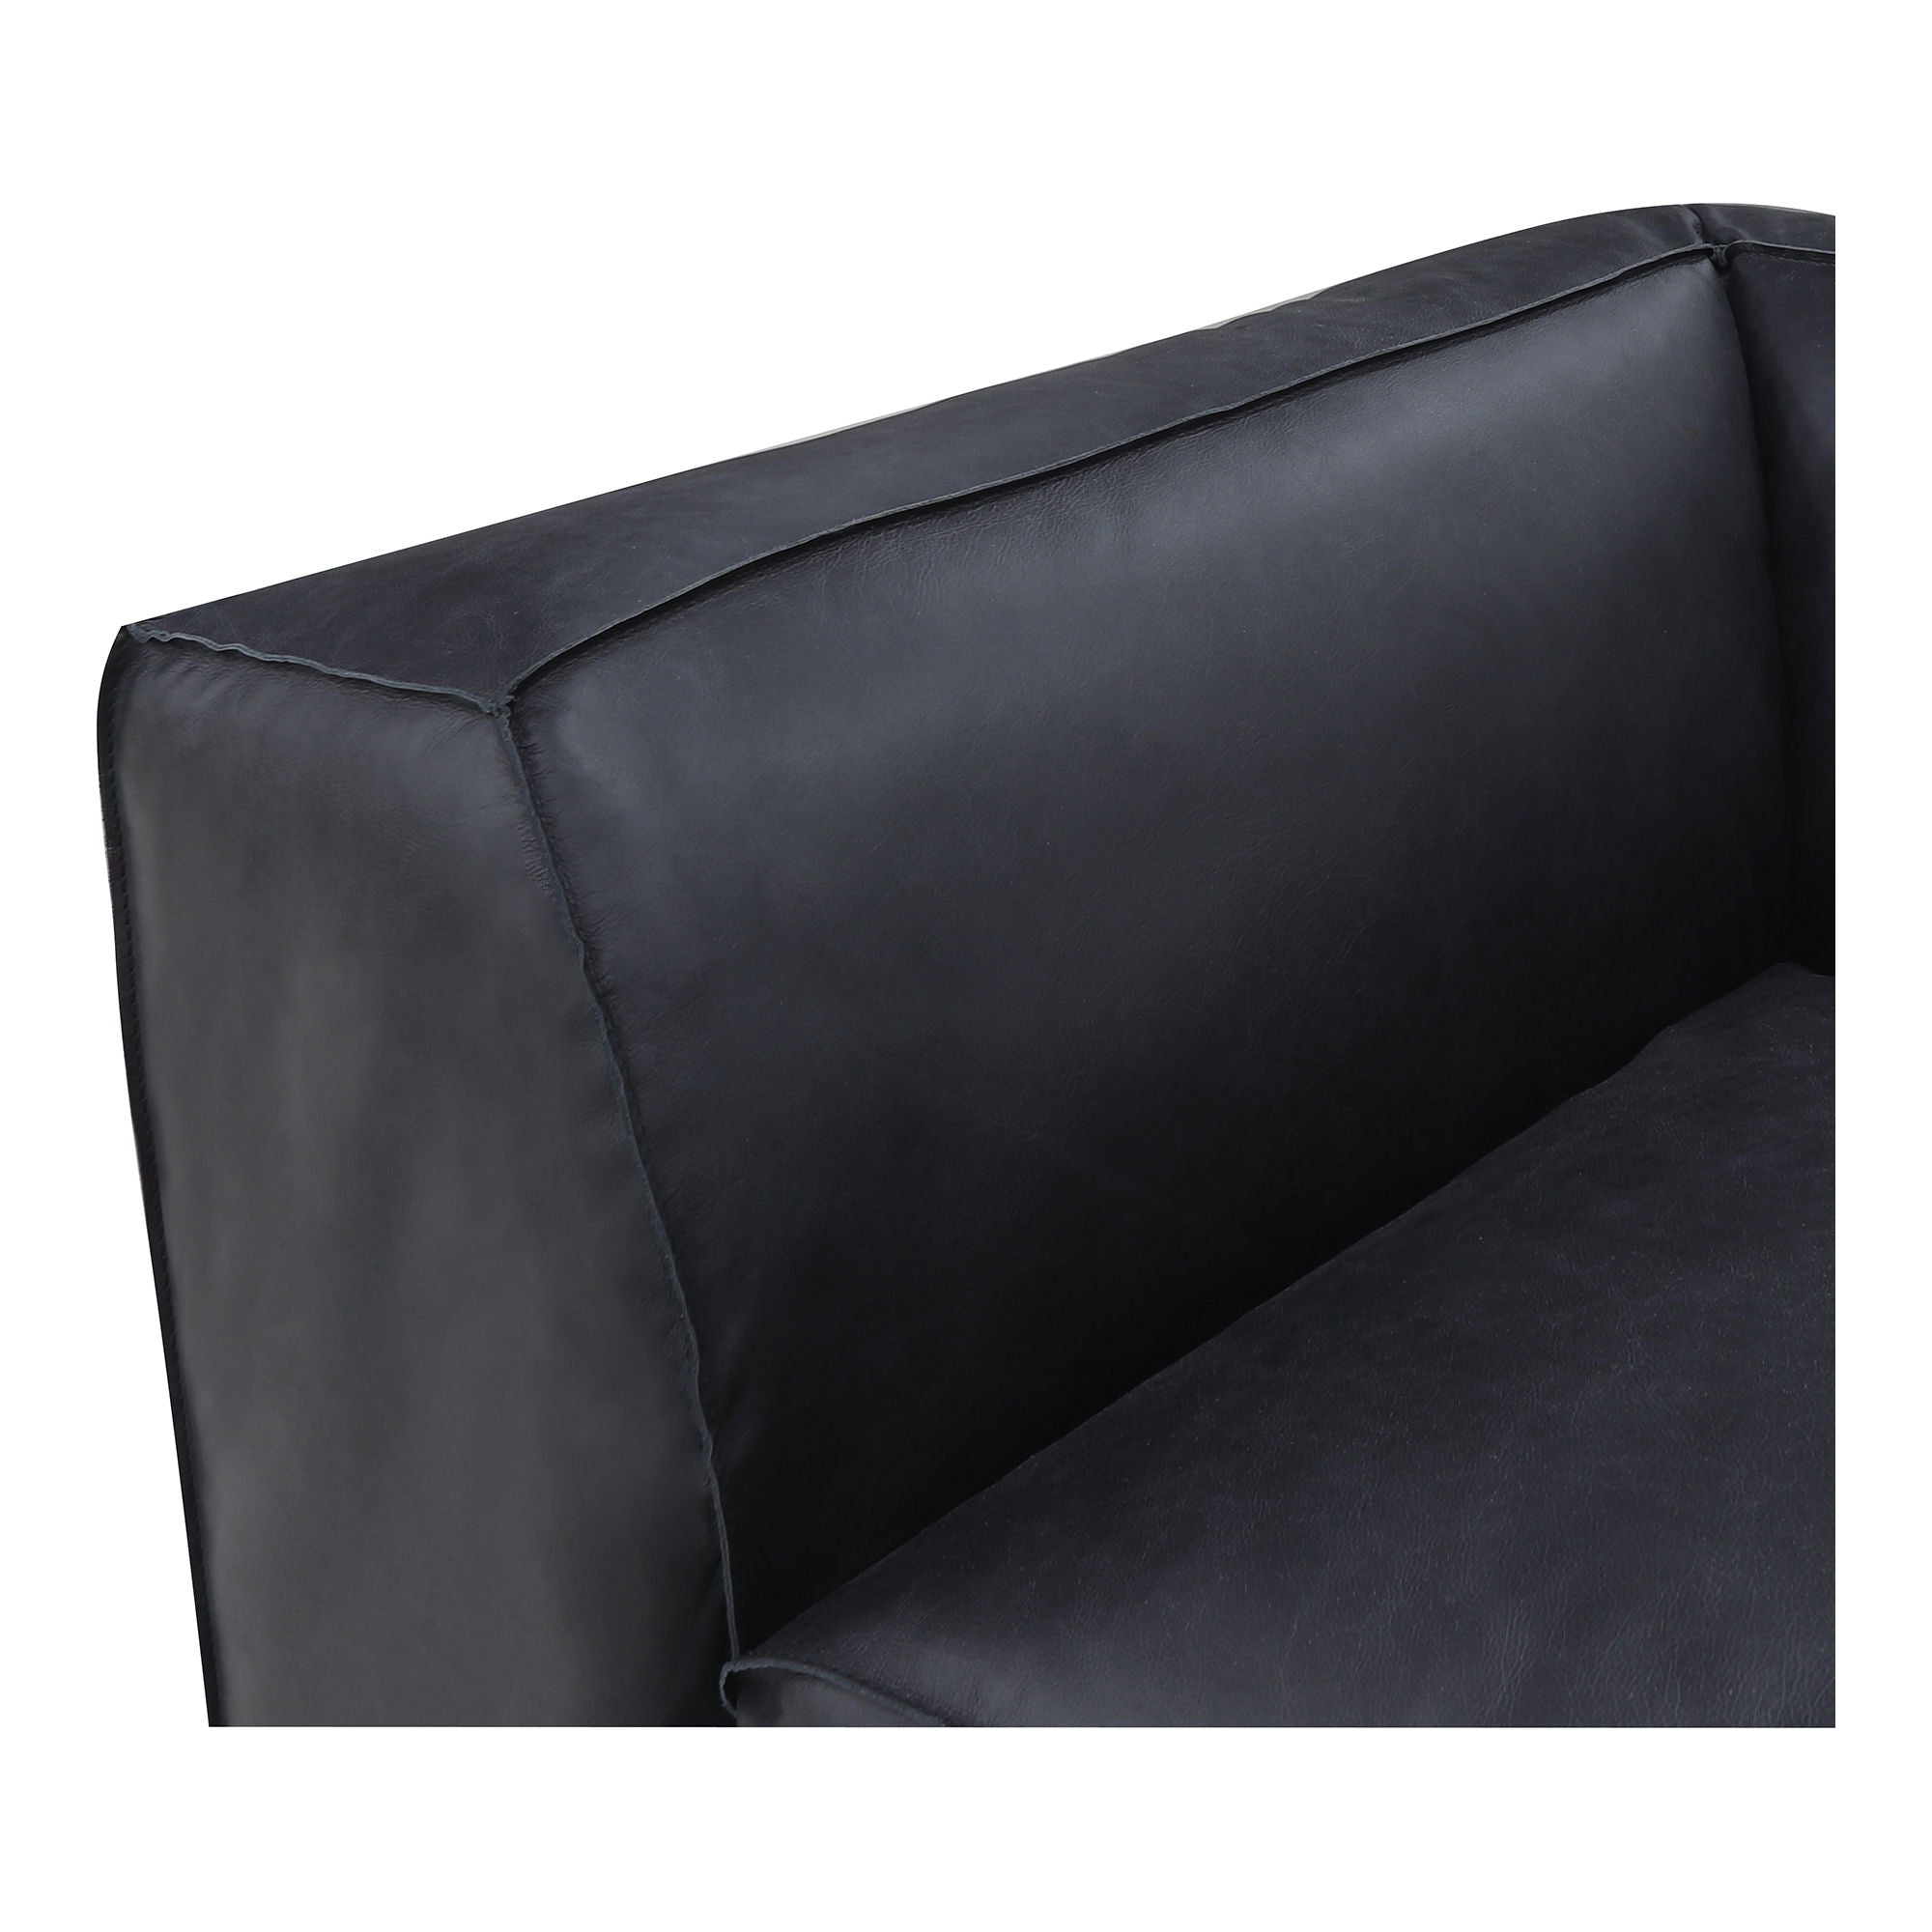 Form - Corner Chair Vantage Black Leather